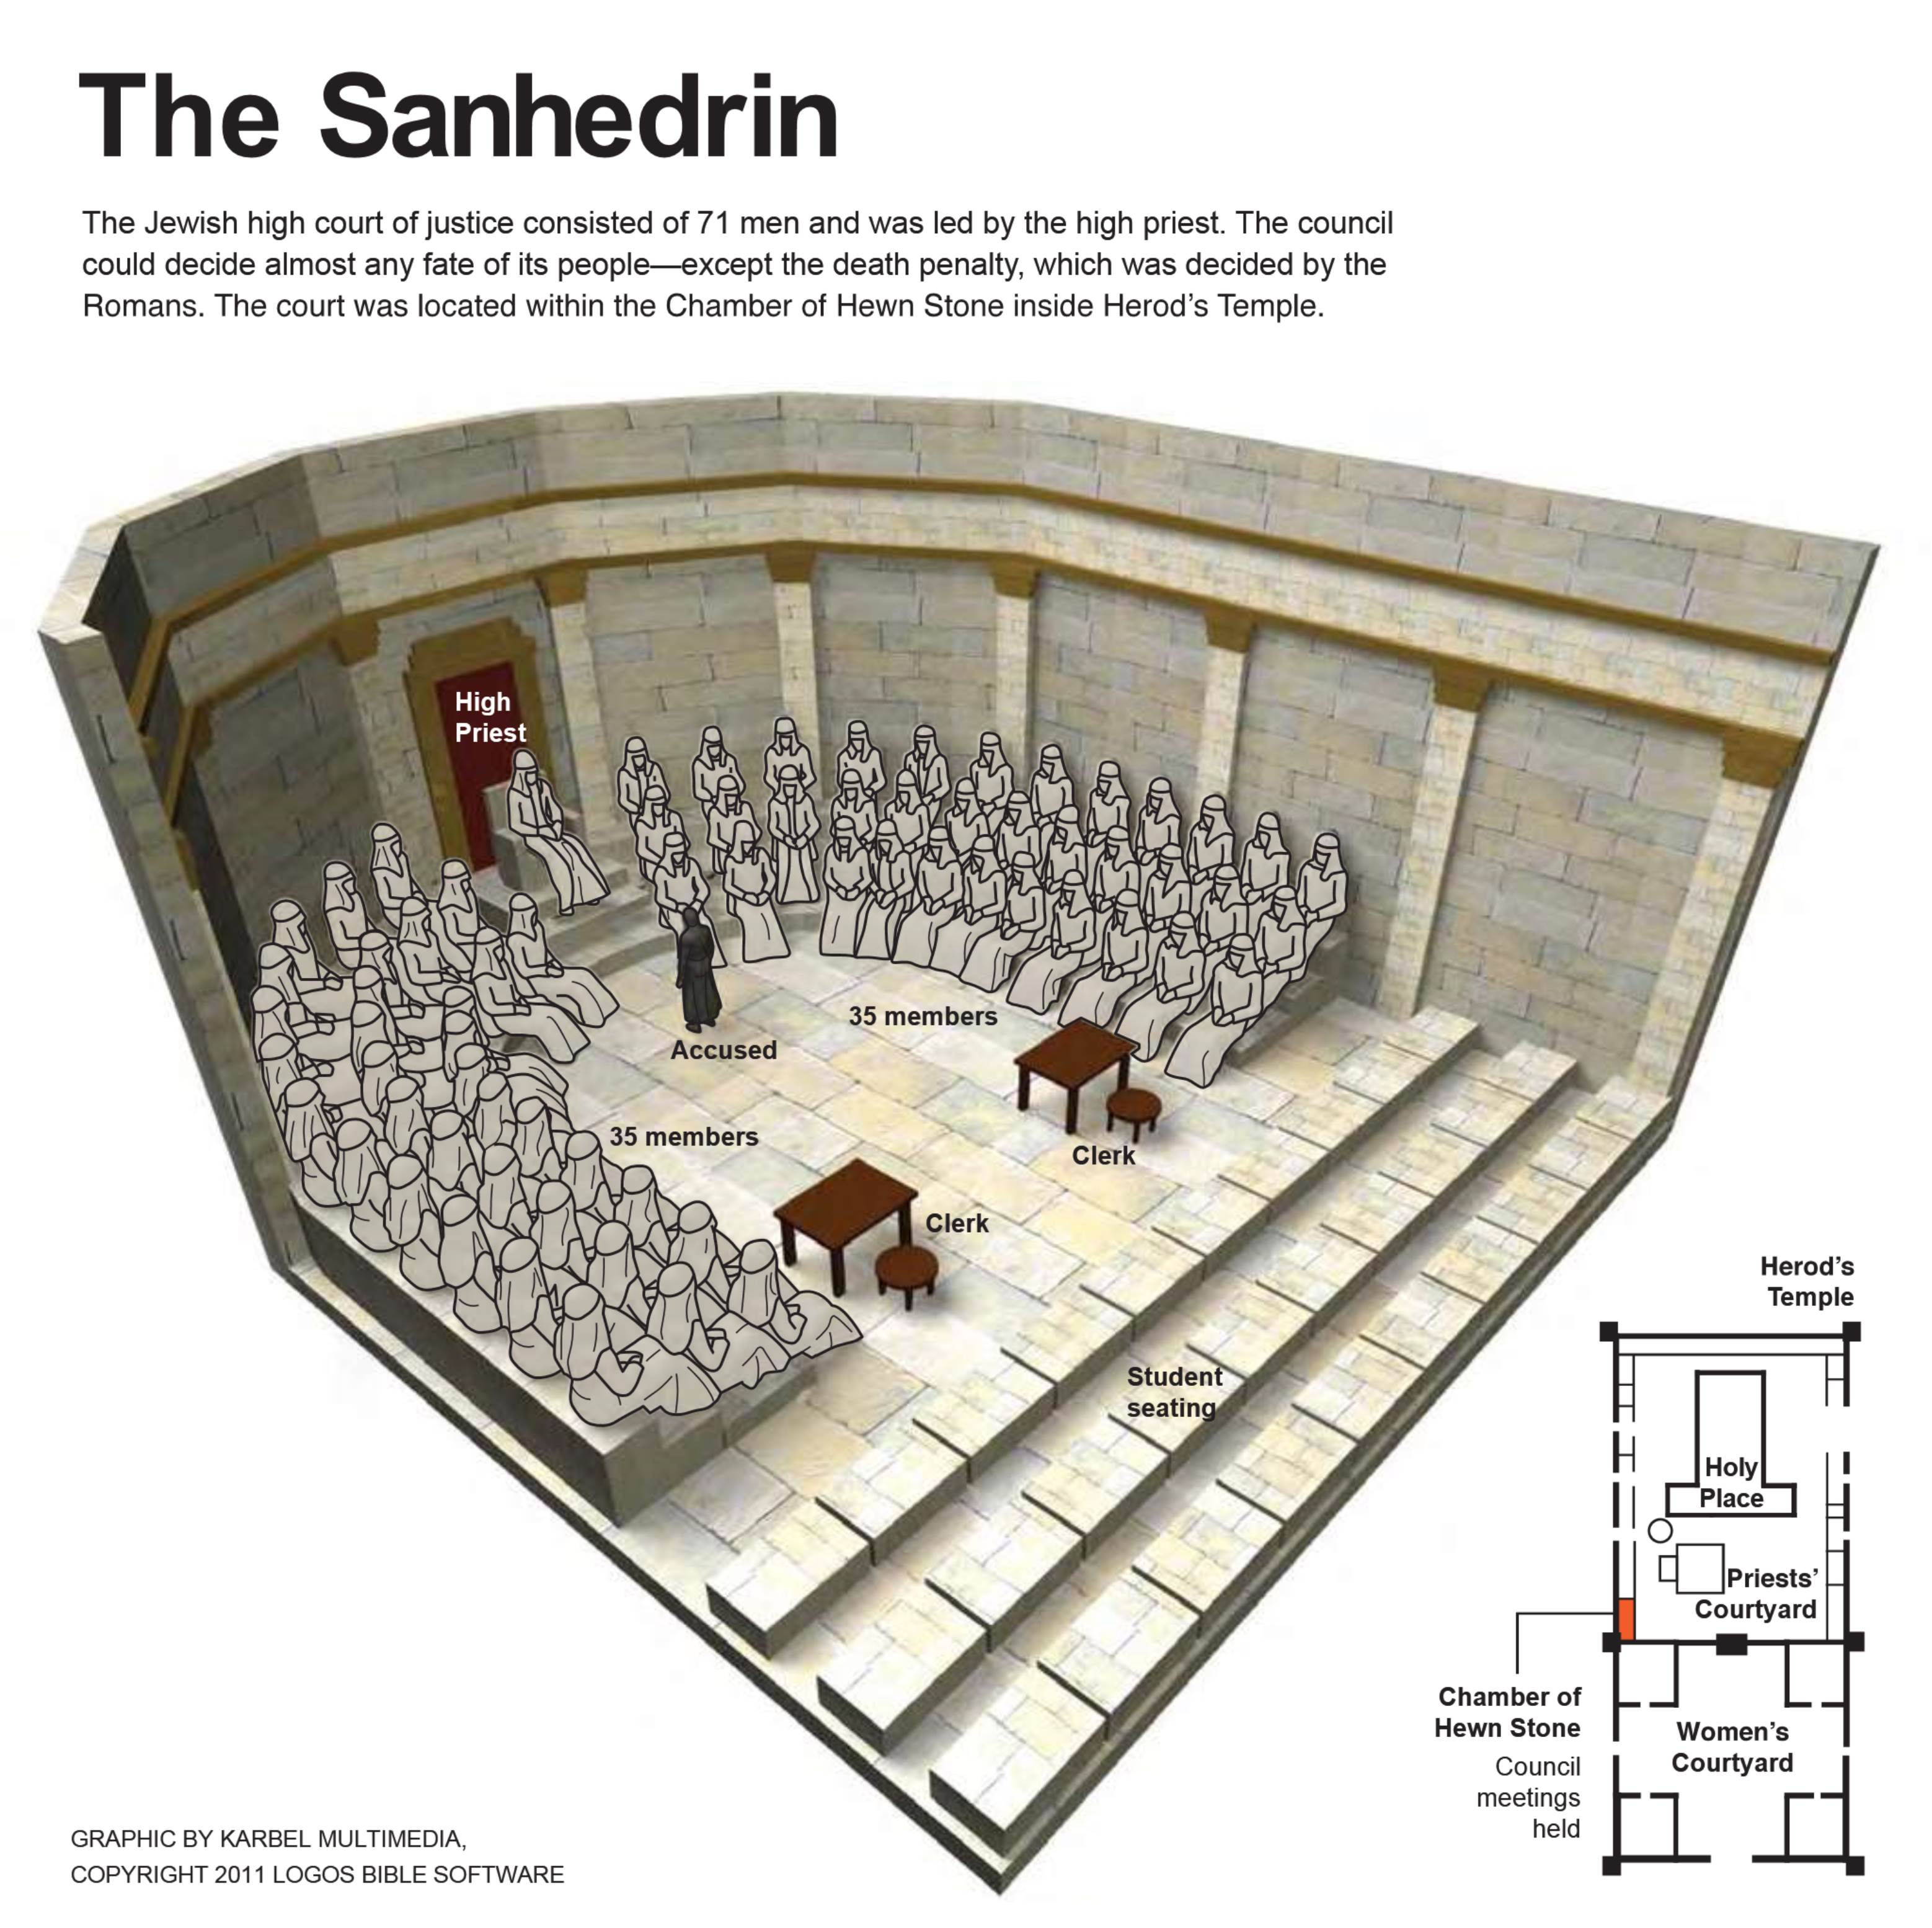 The Sanhedrin